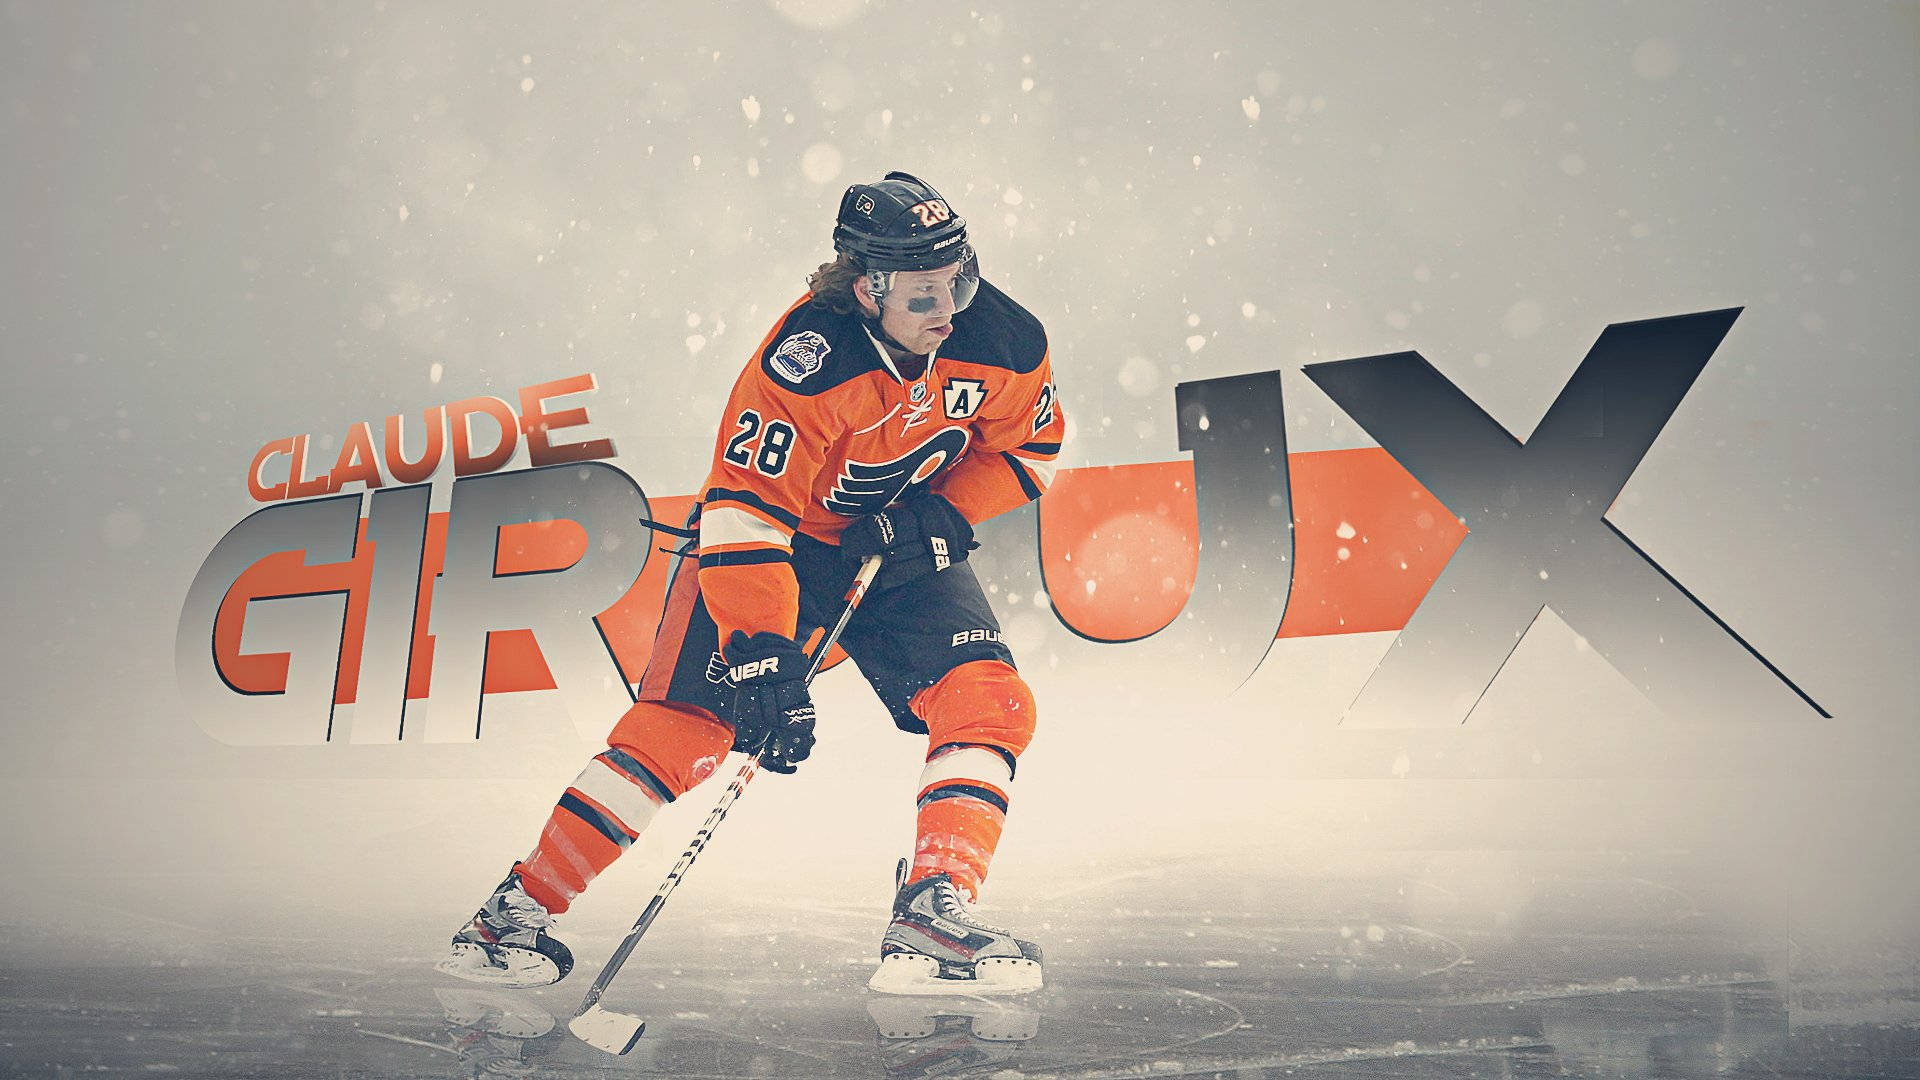 Claude Giroux National Hockey League. Wallpaper